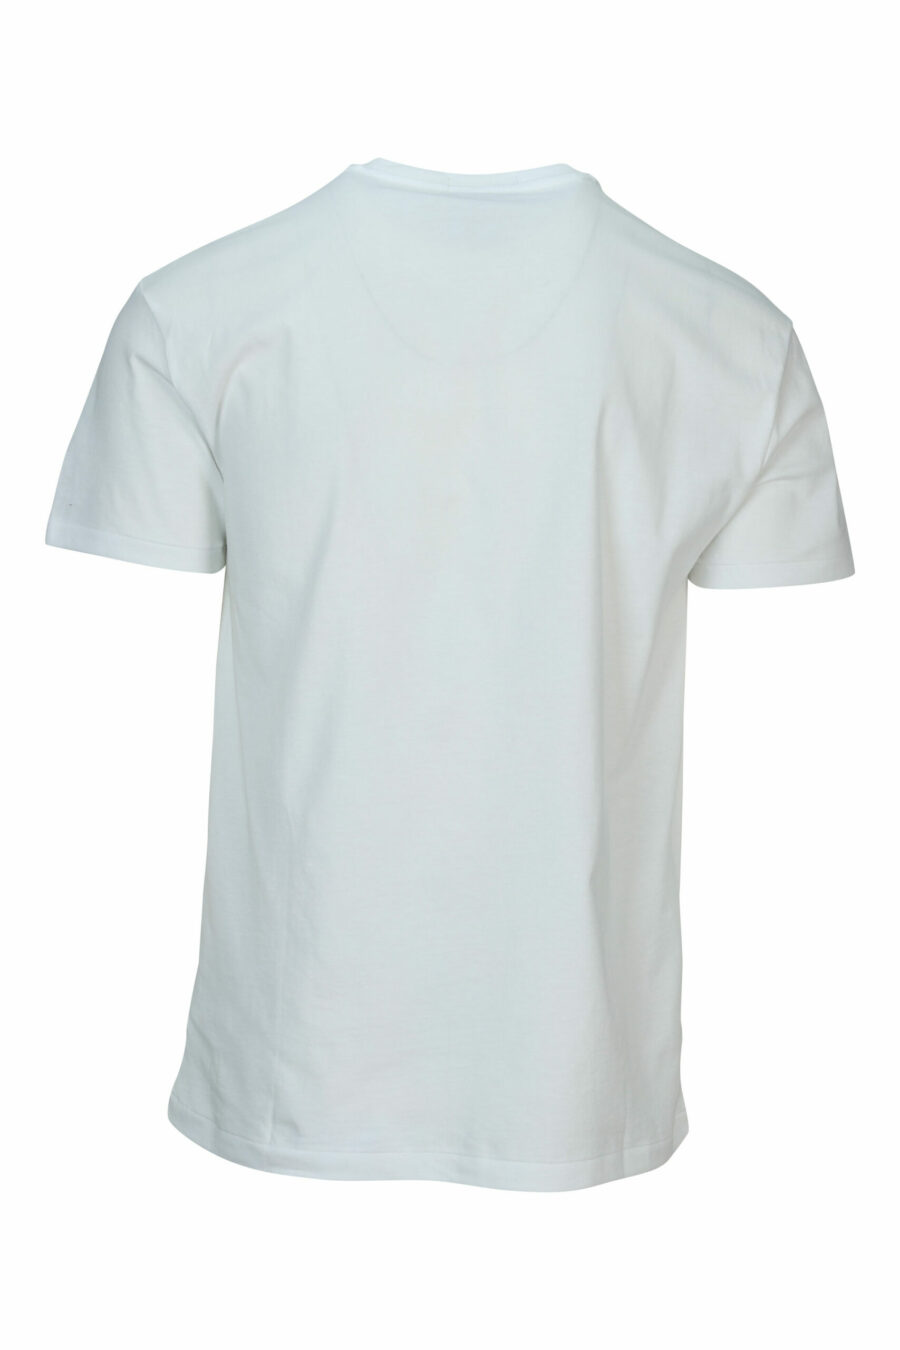 T-shirt blanc avec maxilogo "polo bear" beachwear - 3616535843479 1 à l'échelle